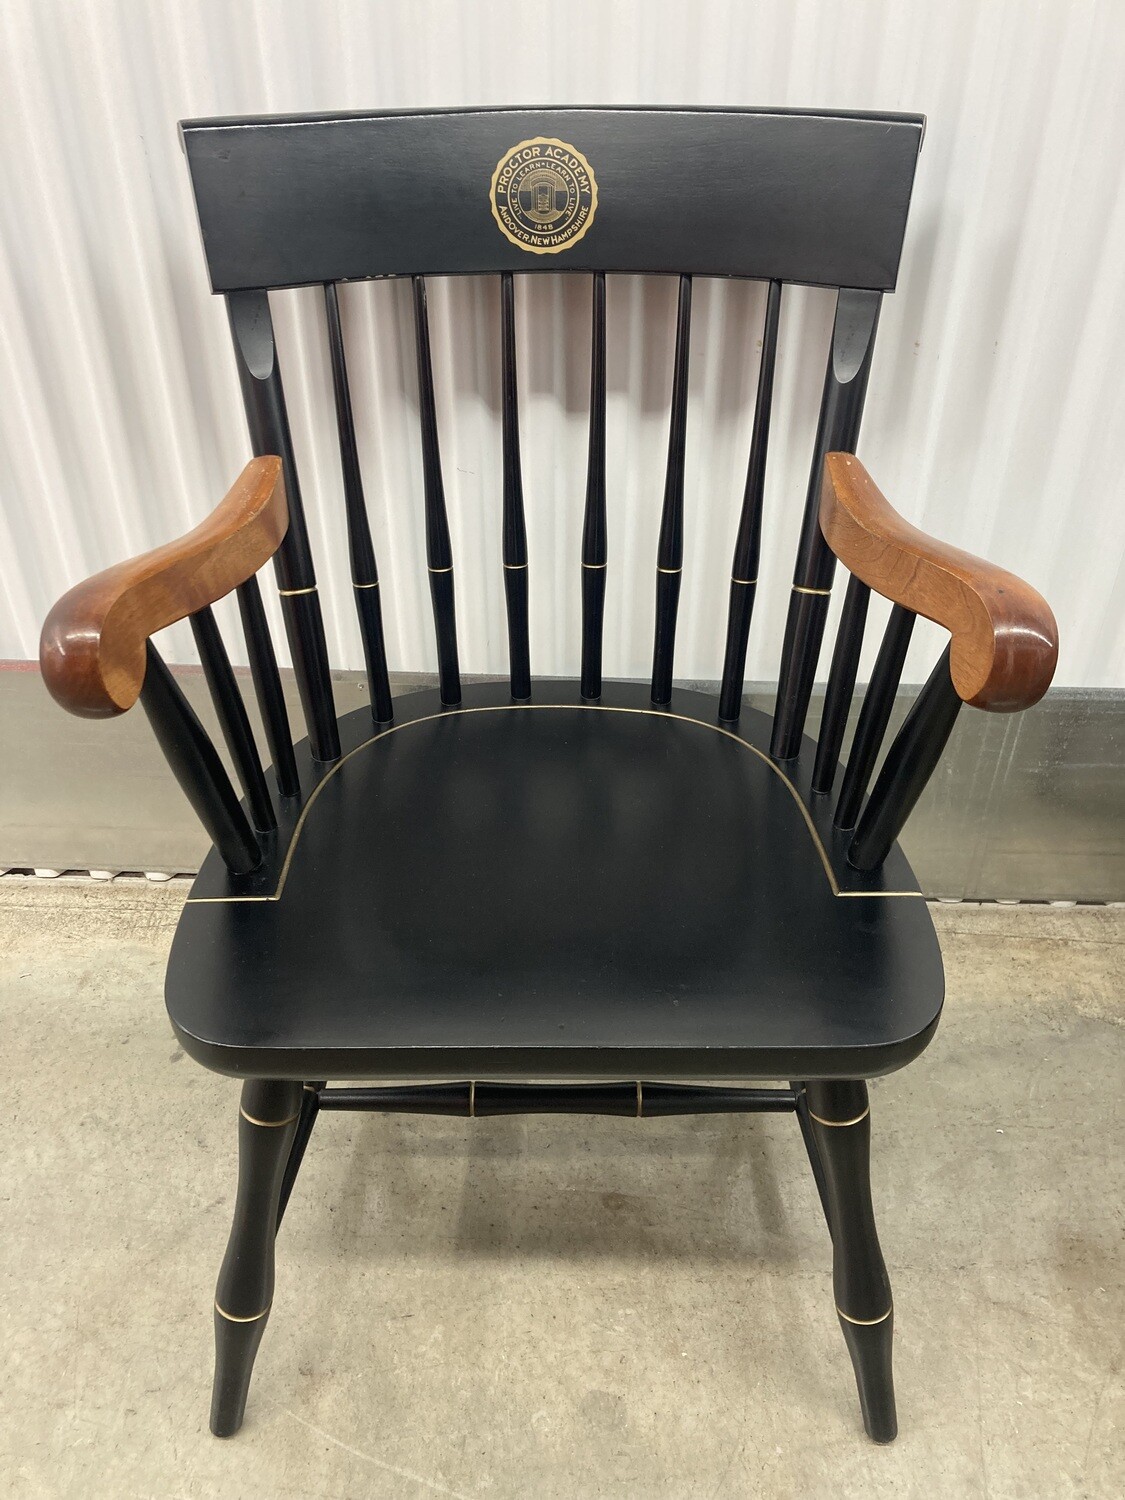 Proctor Academy "College Chair" #2118